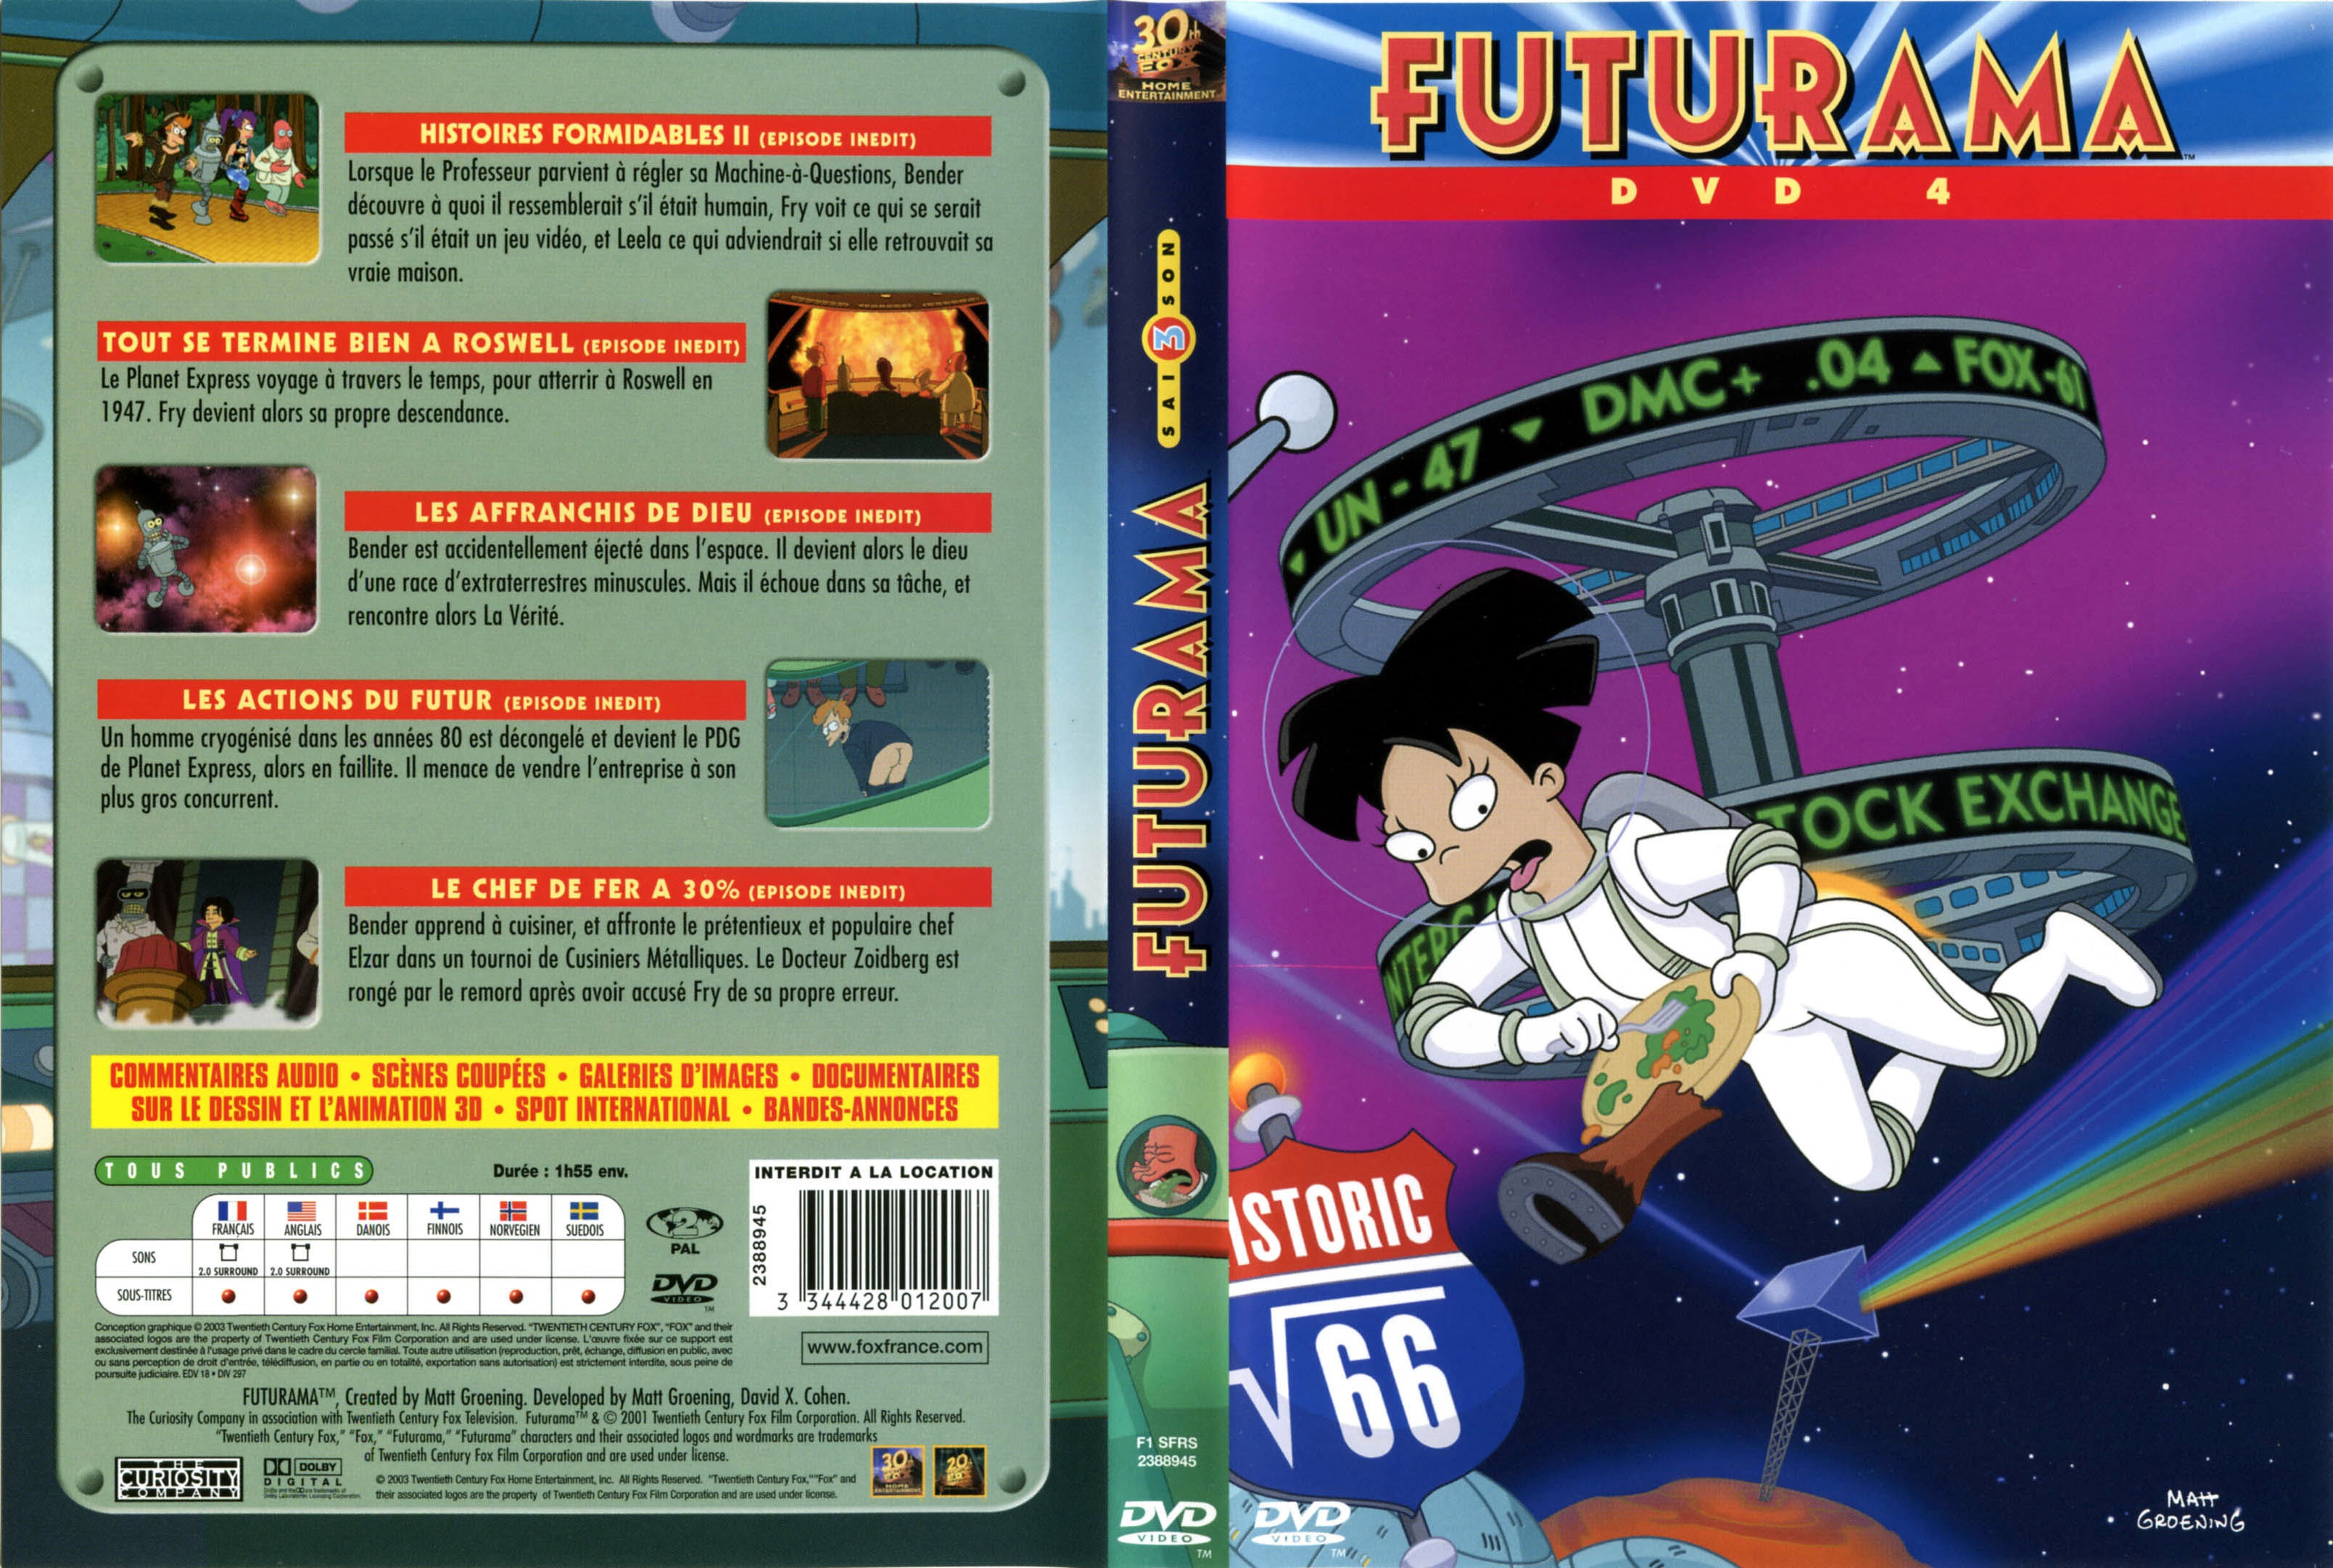 Jaquette DVD Futurama saison 3 DVD 4